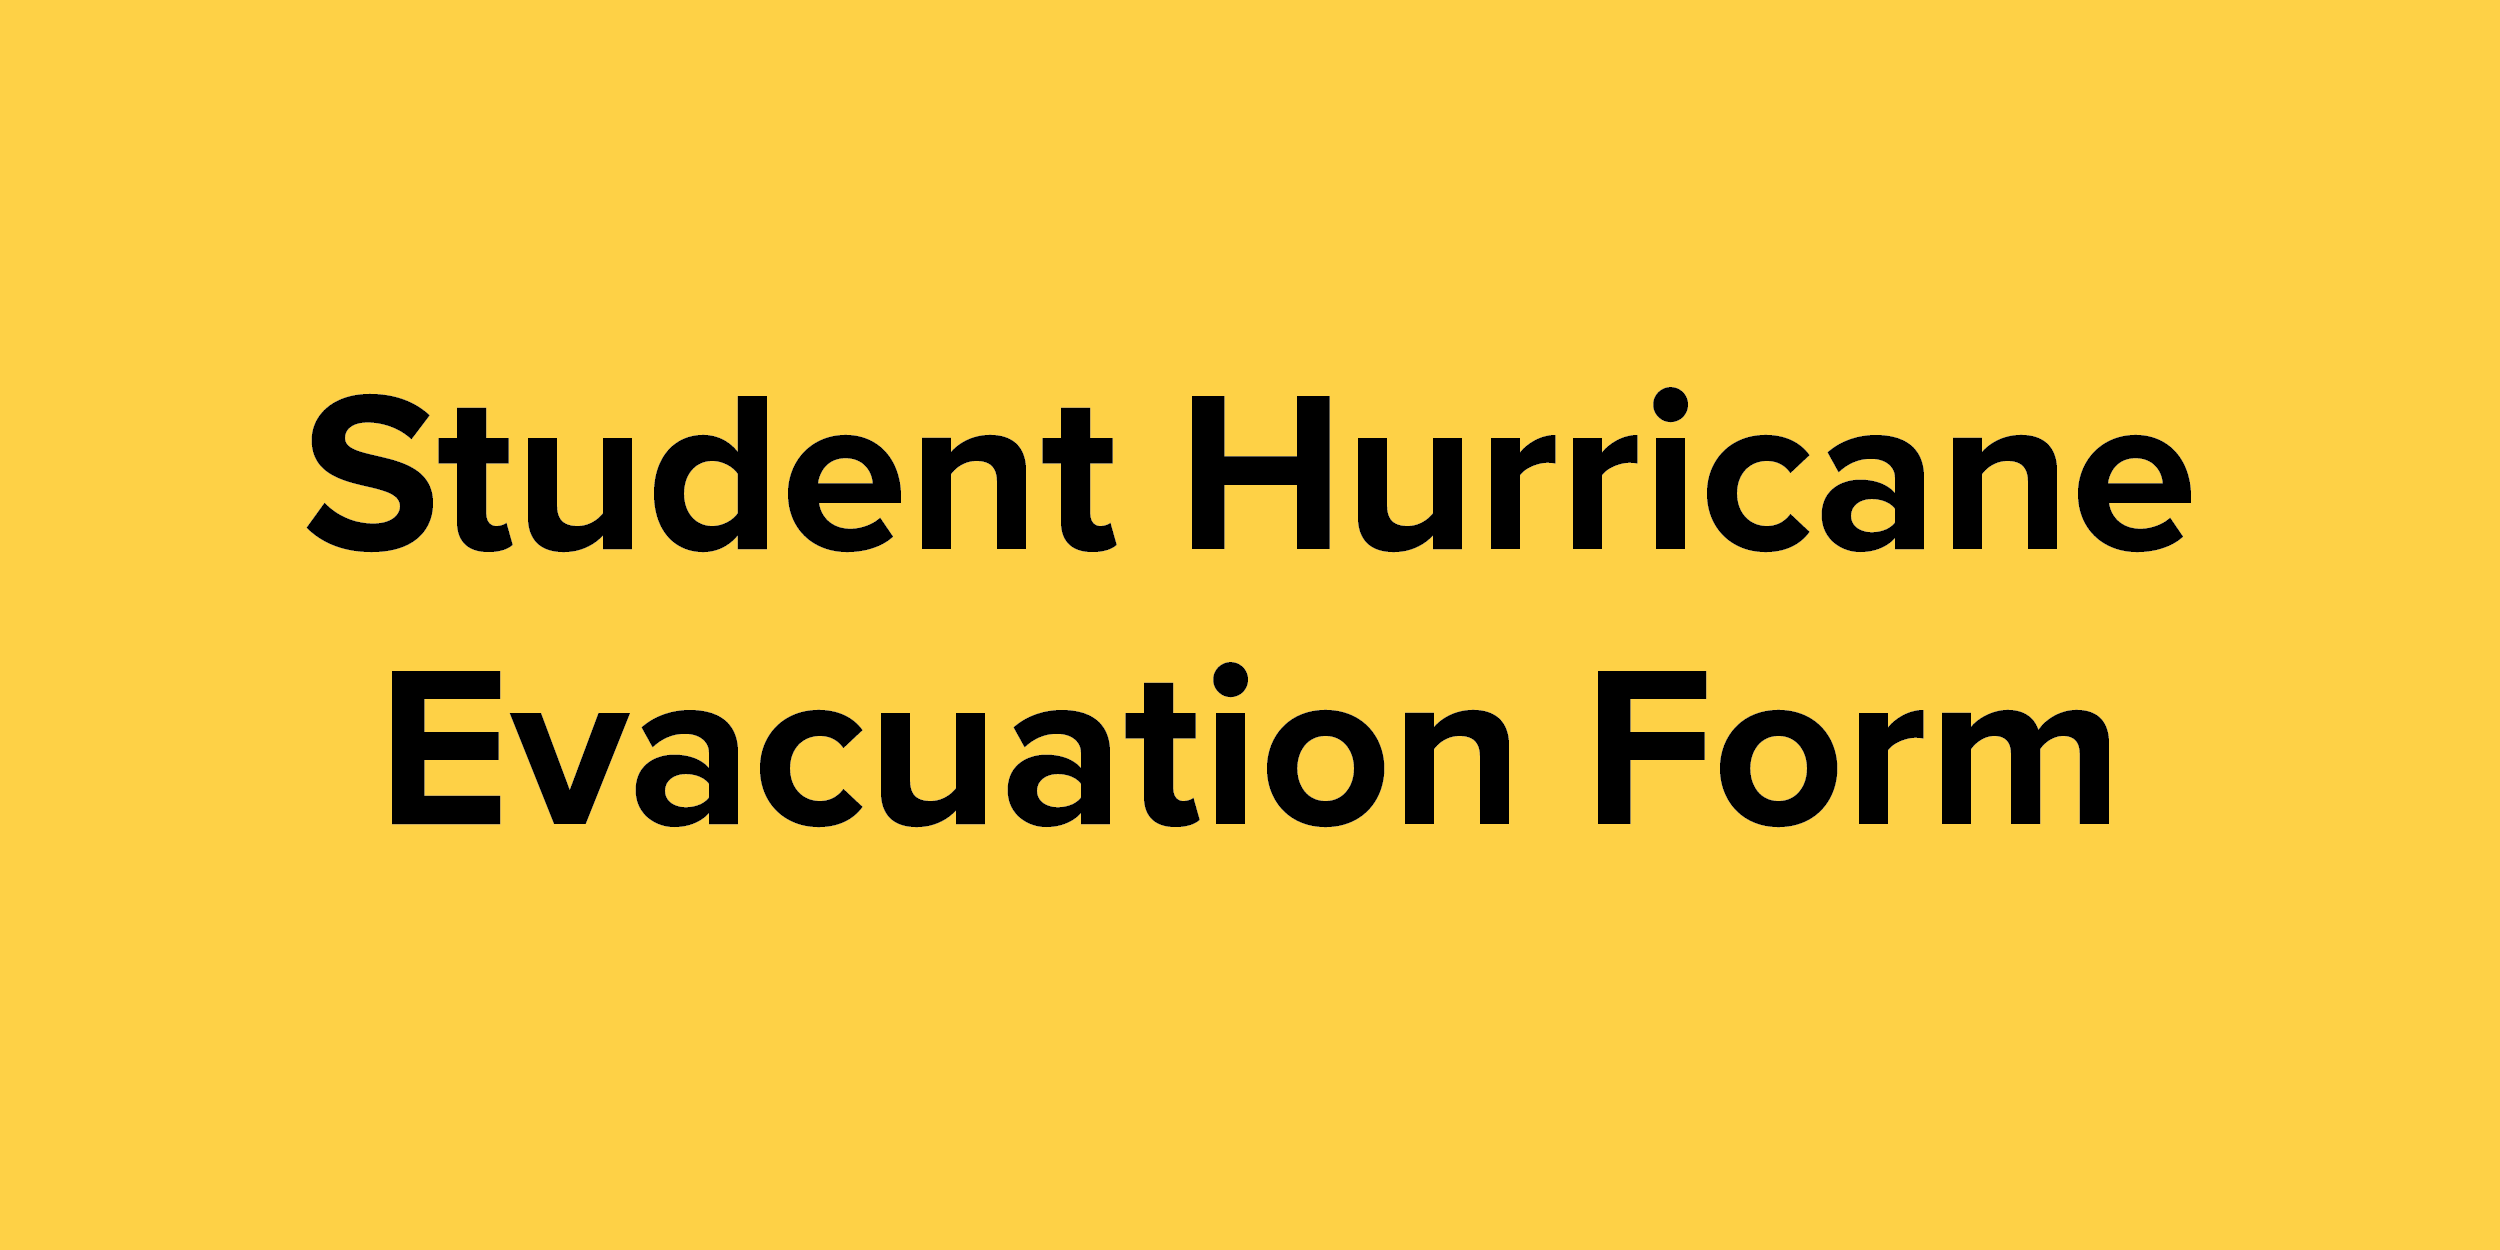 Student Evacuation Form